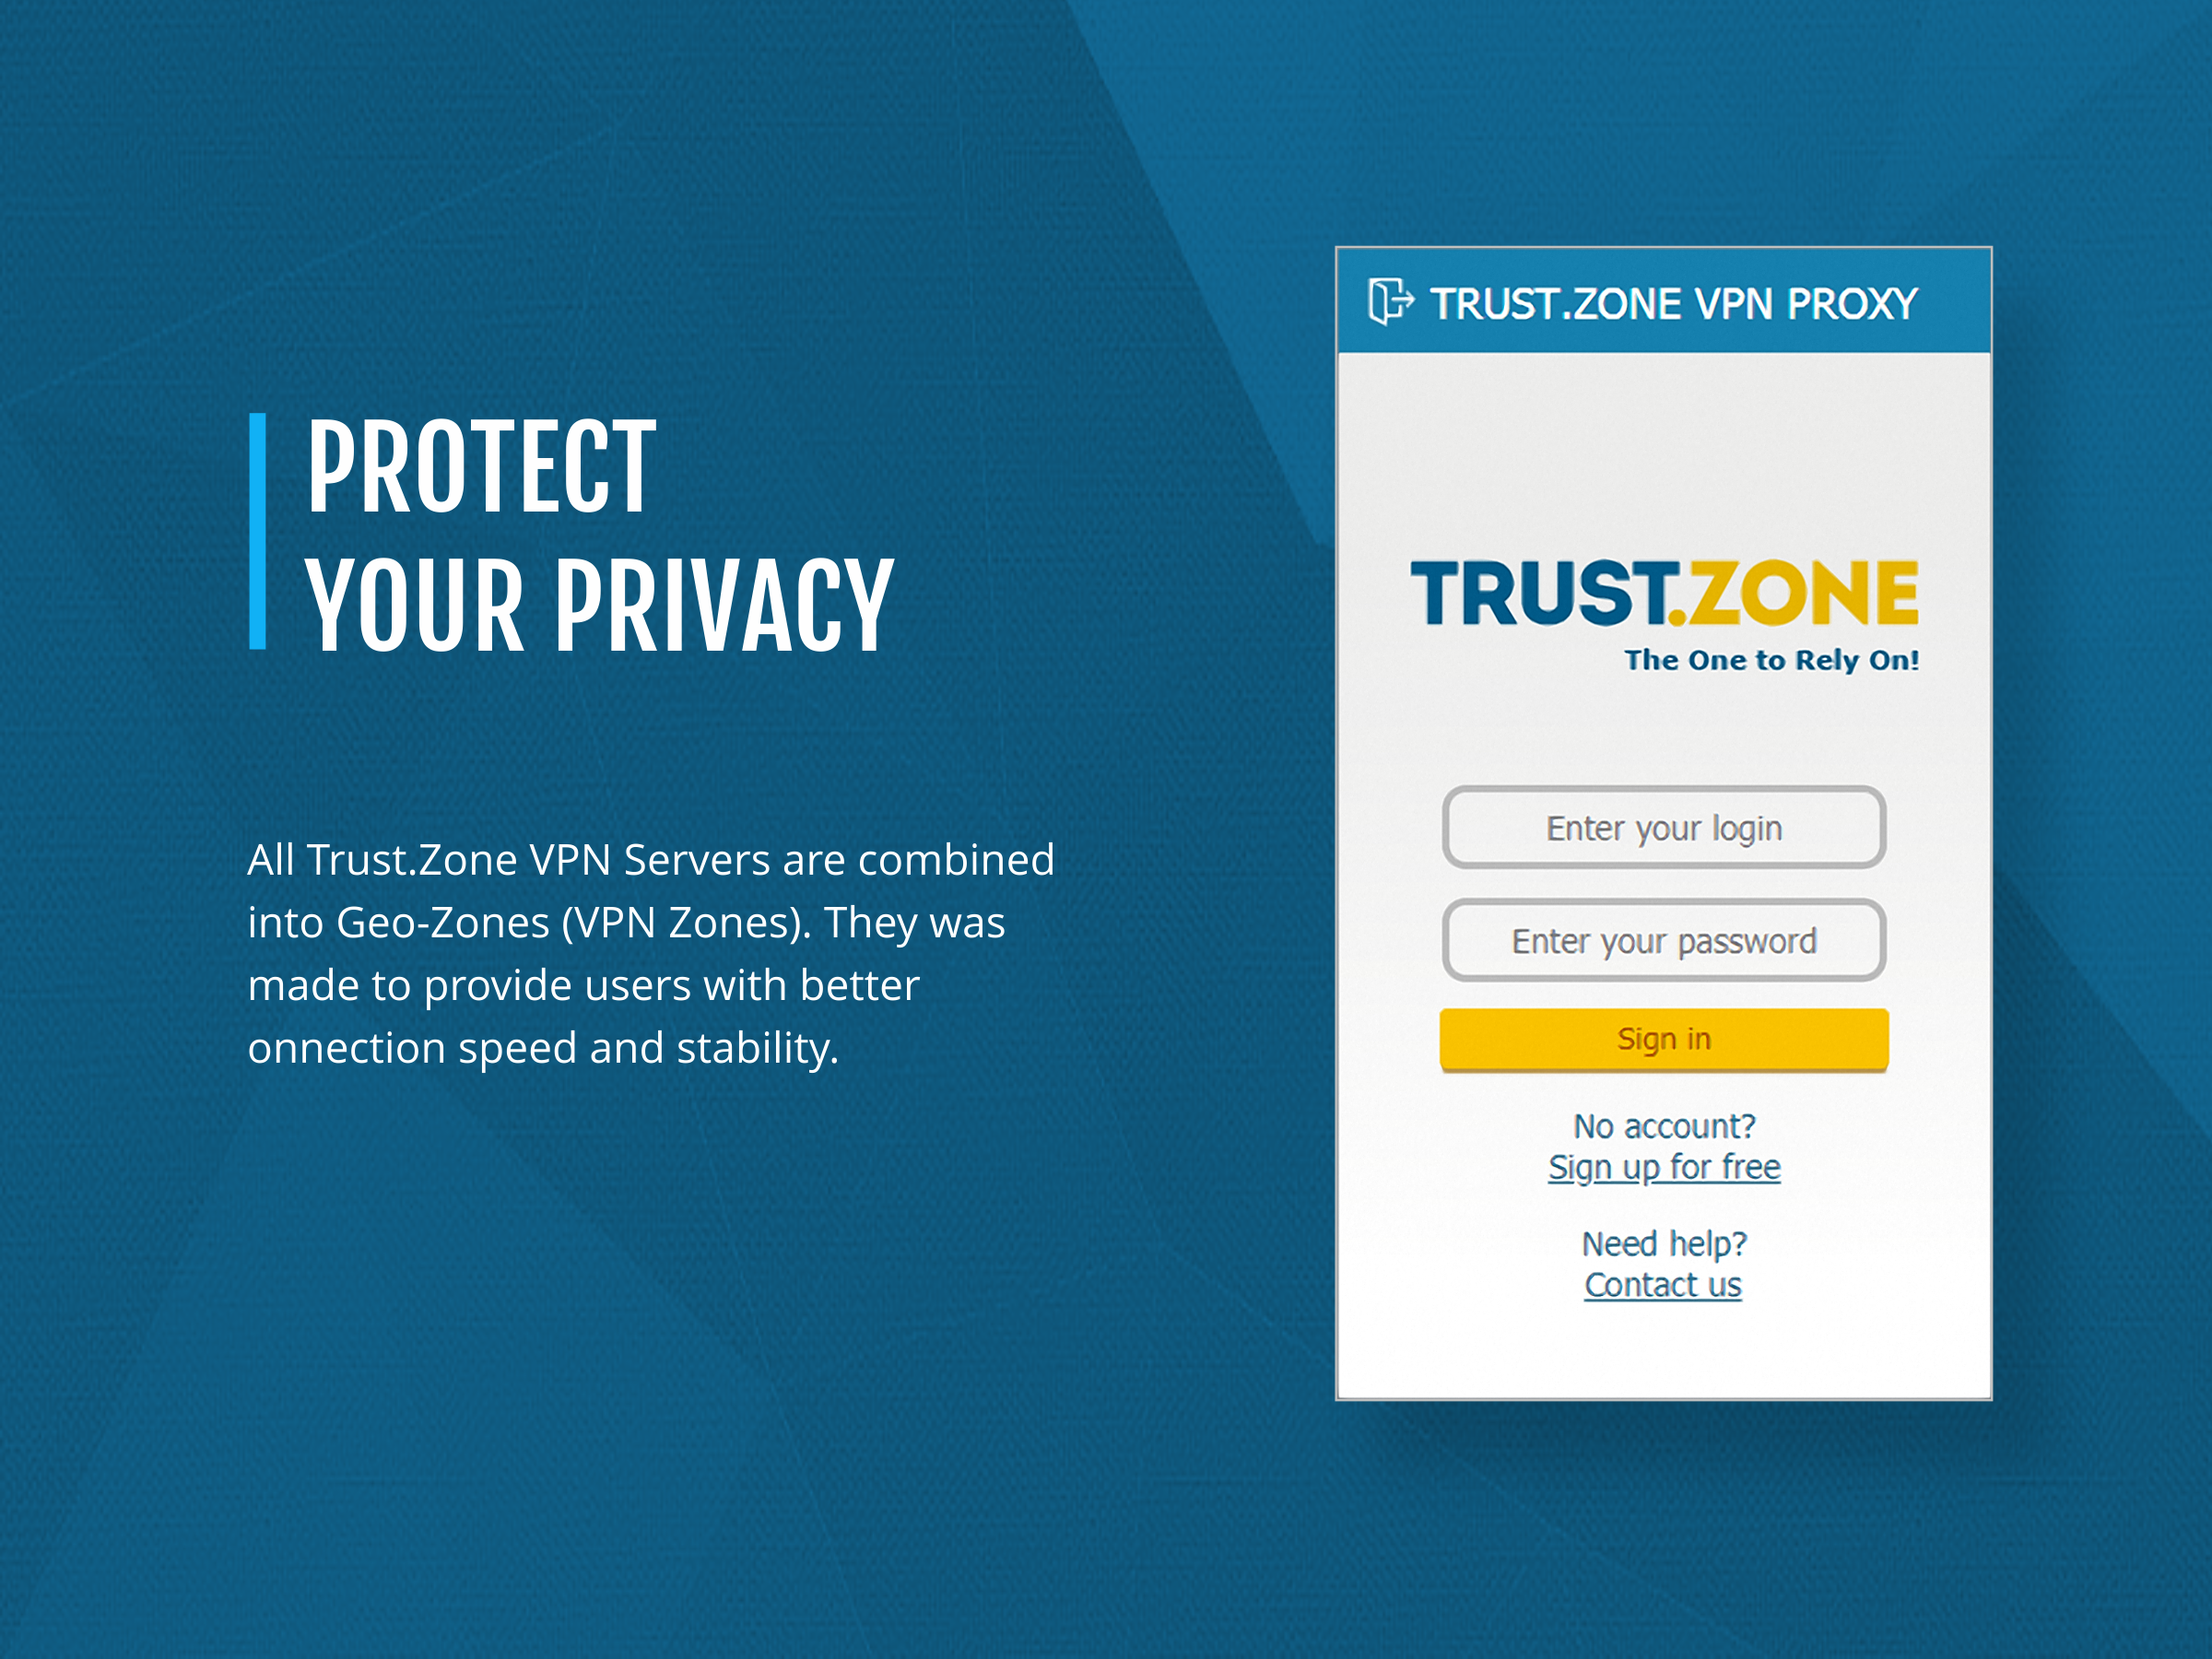 Trust.Zone VPN Proxy